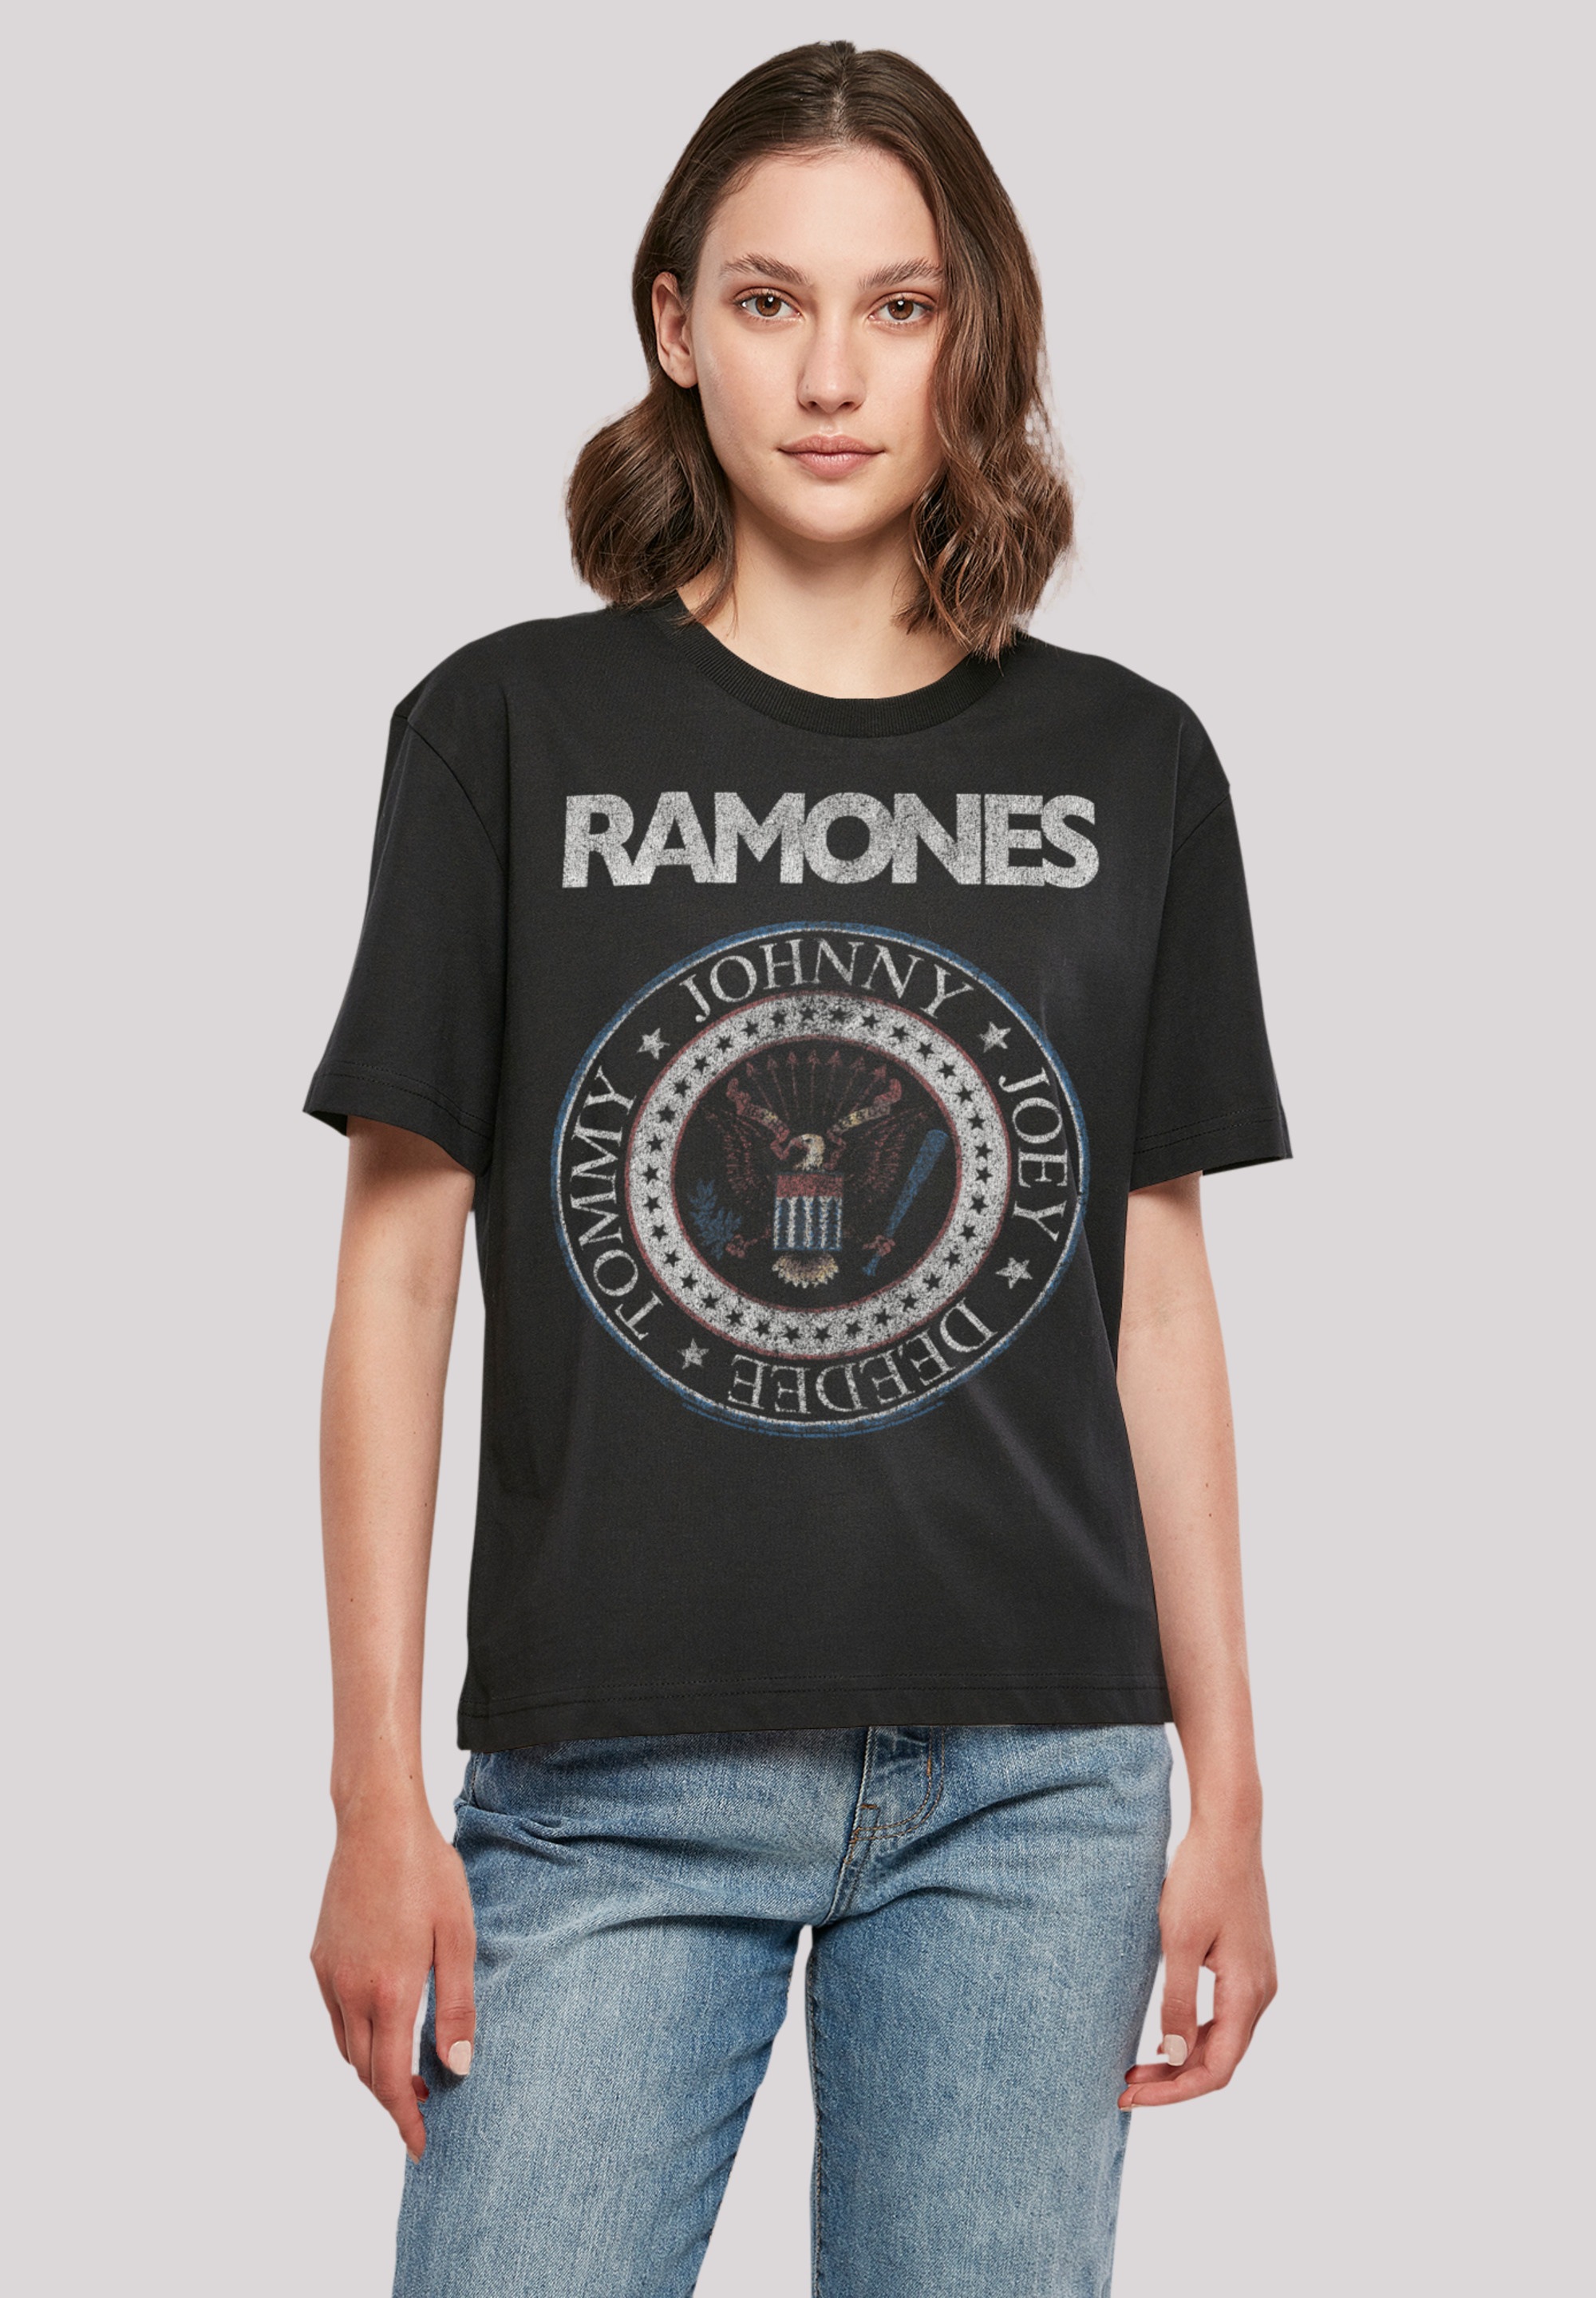 Seal«, F4NT4STIC And Rock Red White Musik Rock-Musik Qualität, walking | »Ramones online I\'m T-Shirt Band, Premium kaufen Band